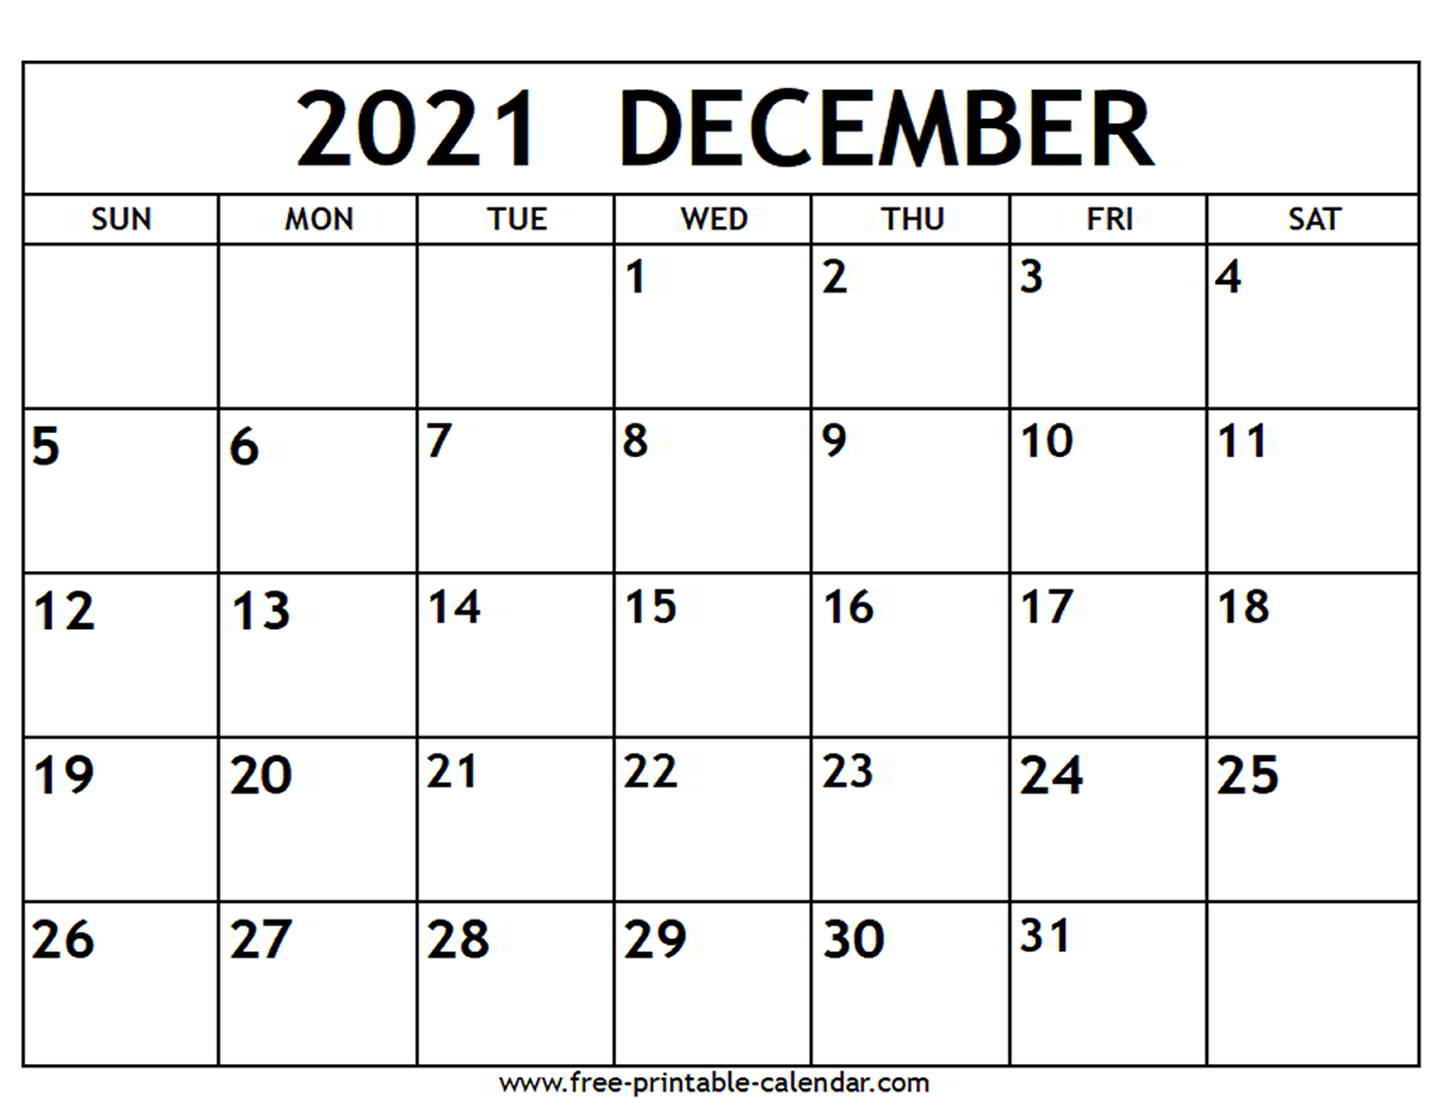 December 2021 Calendar - Free-Printable-Calendar